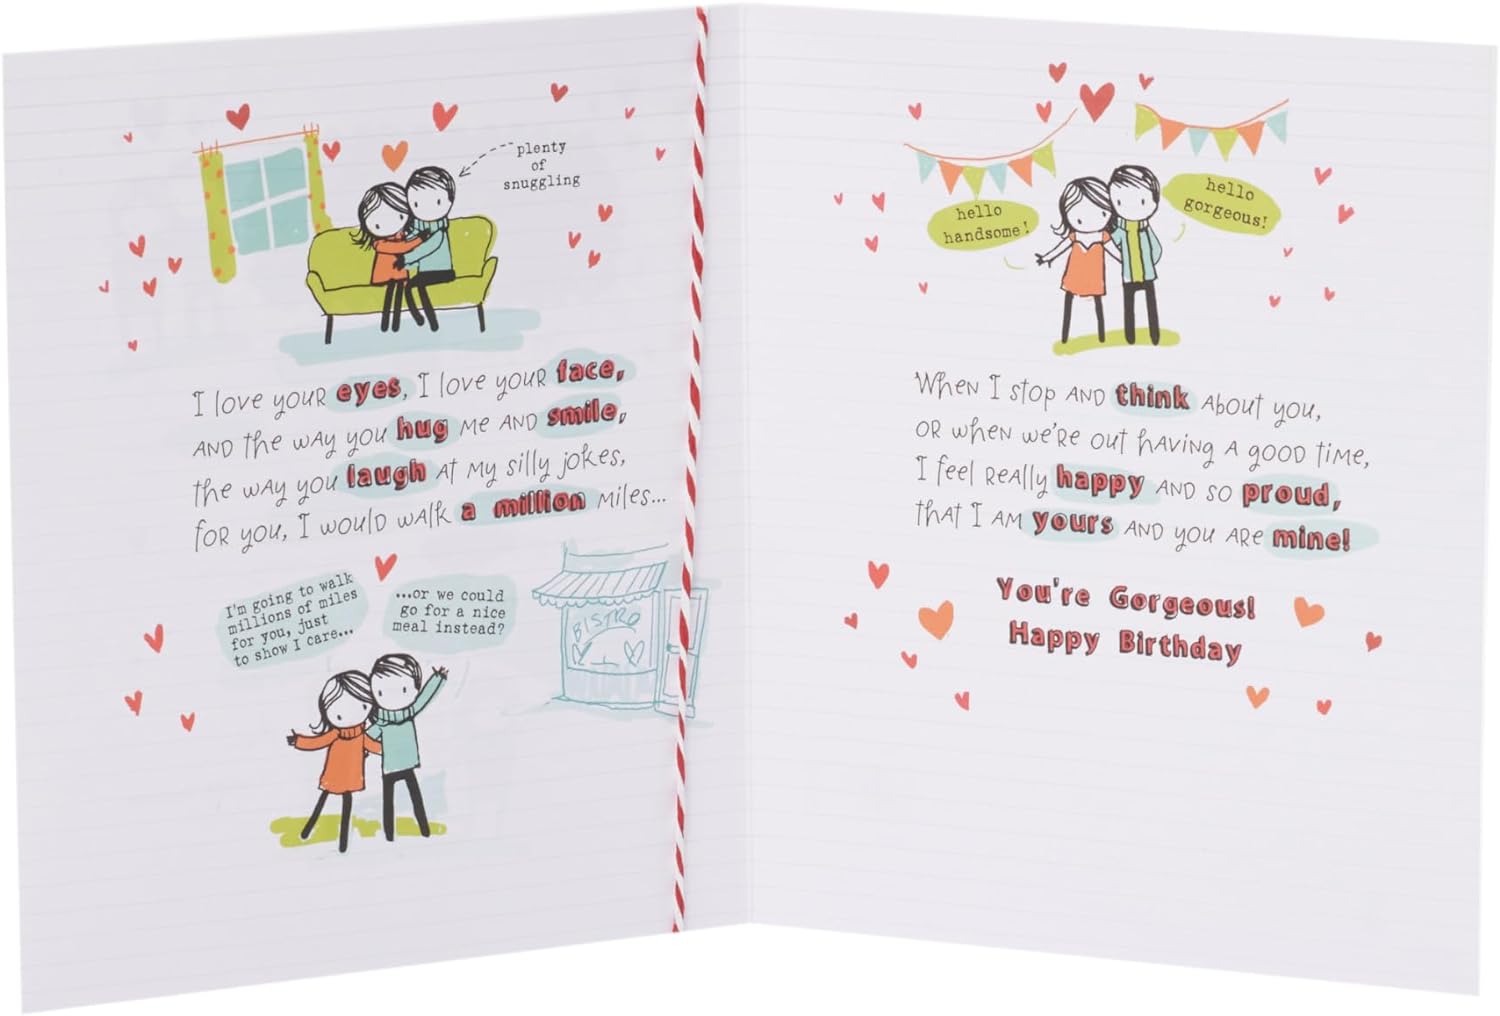 Birthday Card For Boyfriend. Every Day Is My Birthday | Greeting Card